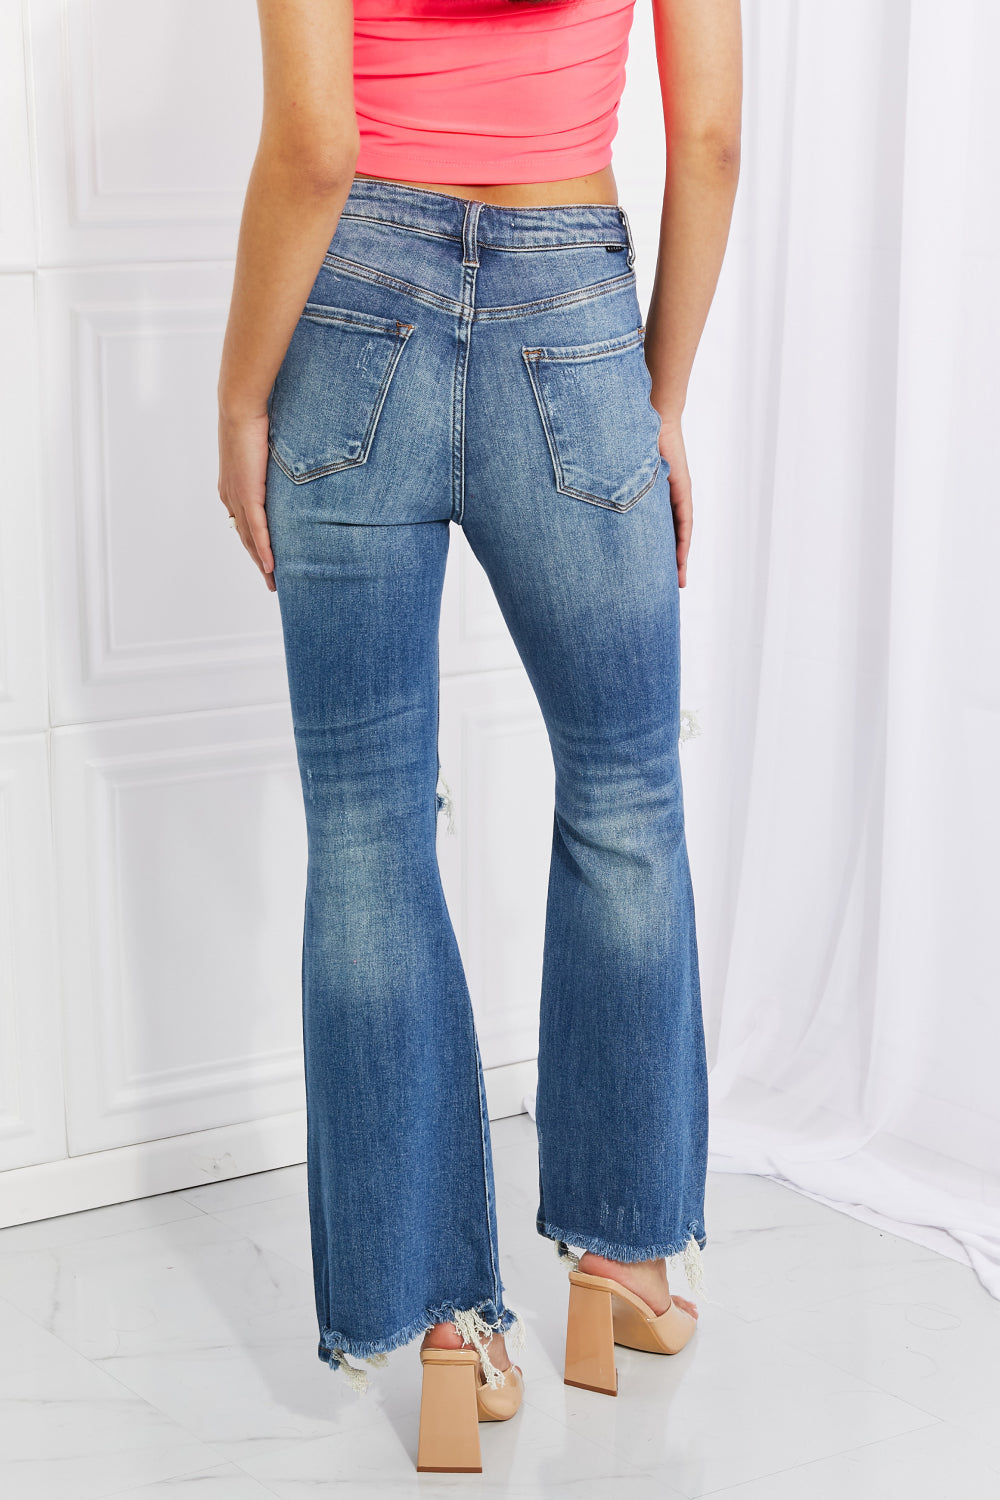 RISEN Hazel High Rise Distressed Flare Jeans | Comfortable Denim | Retro 70s vibe